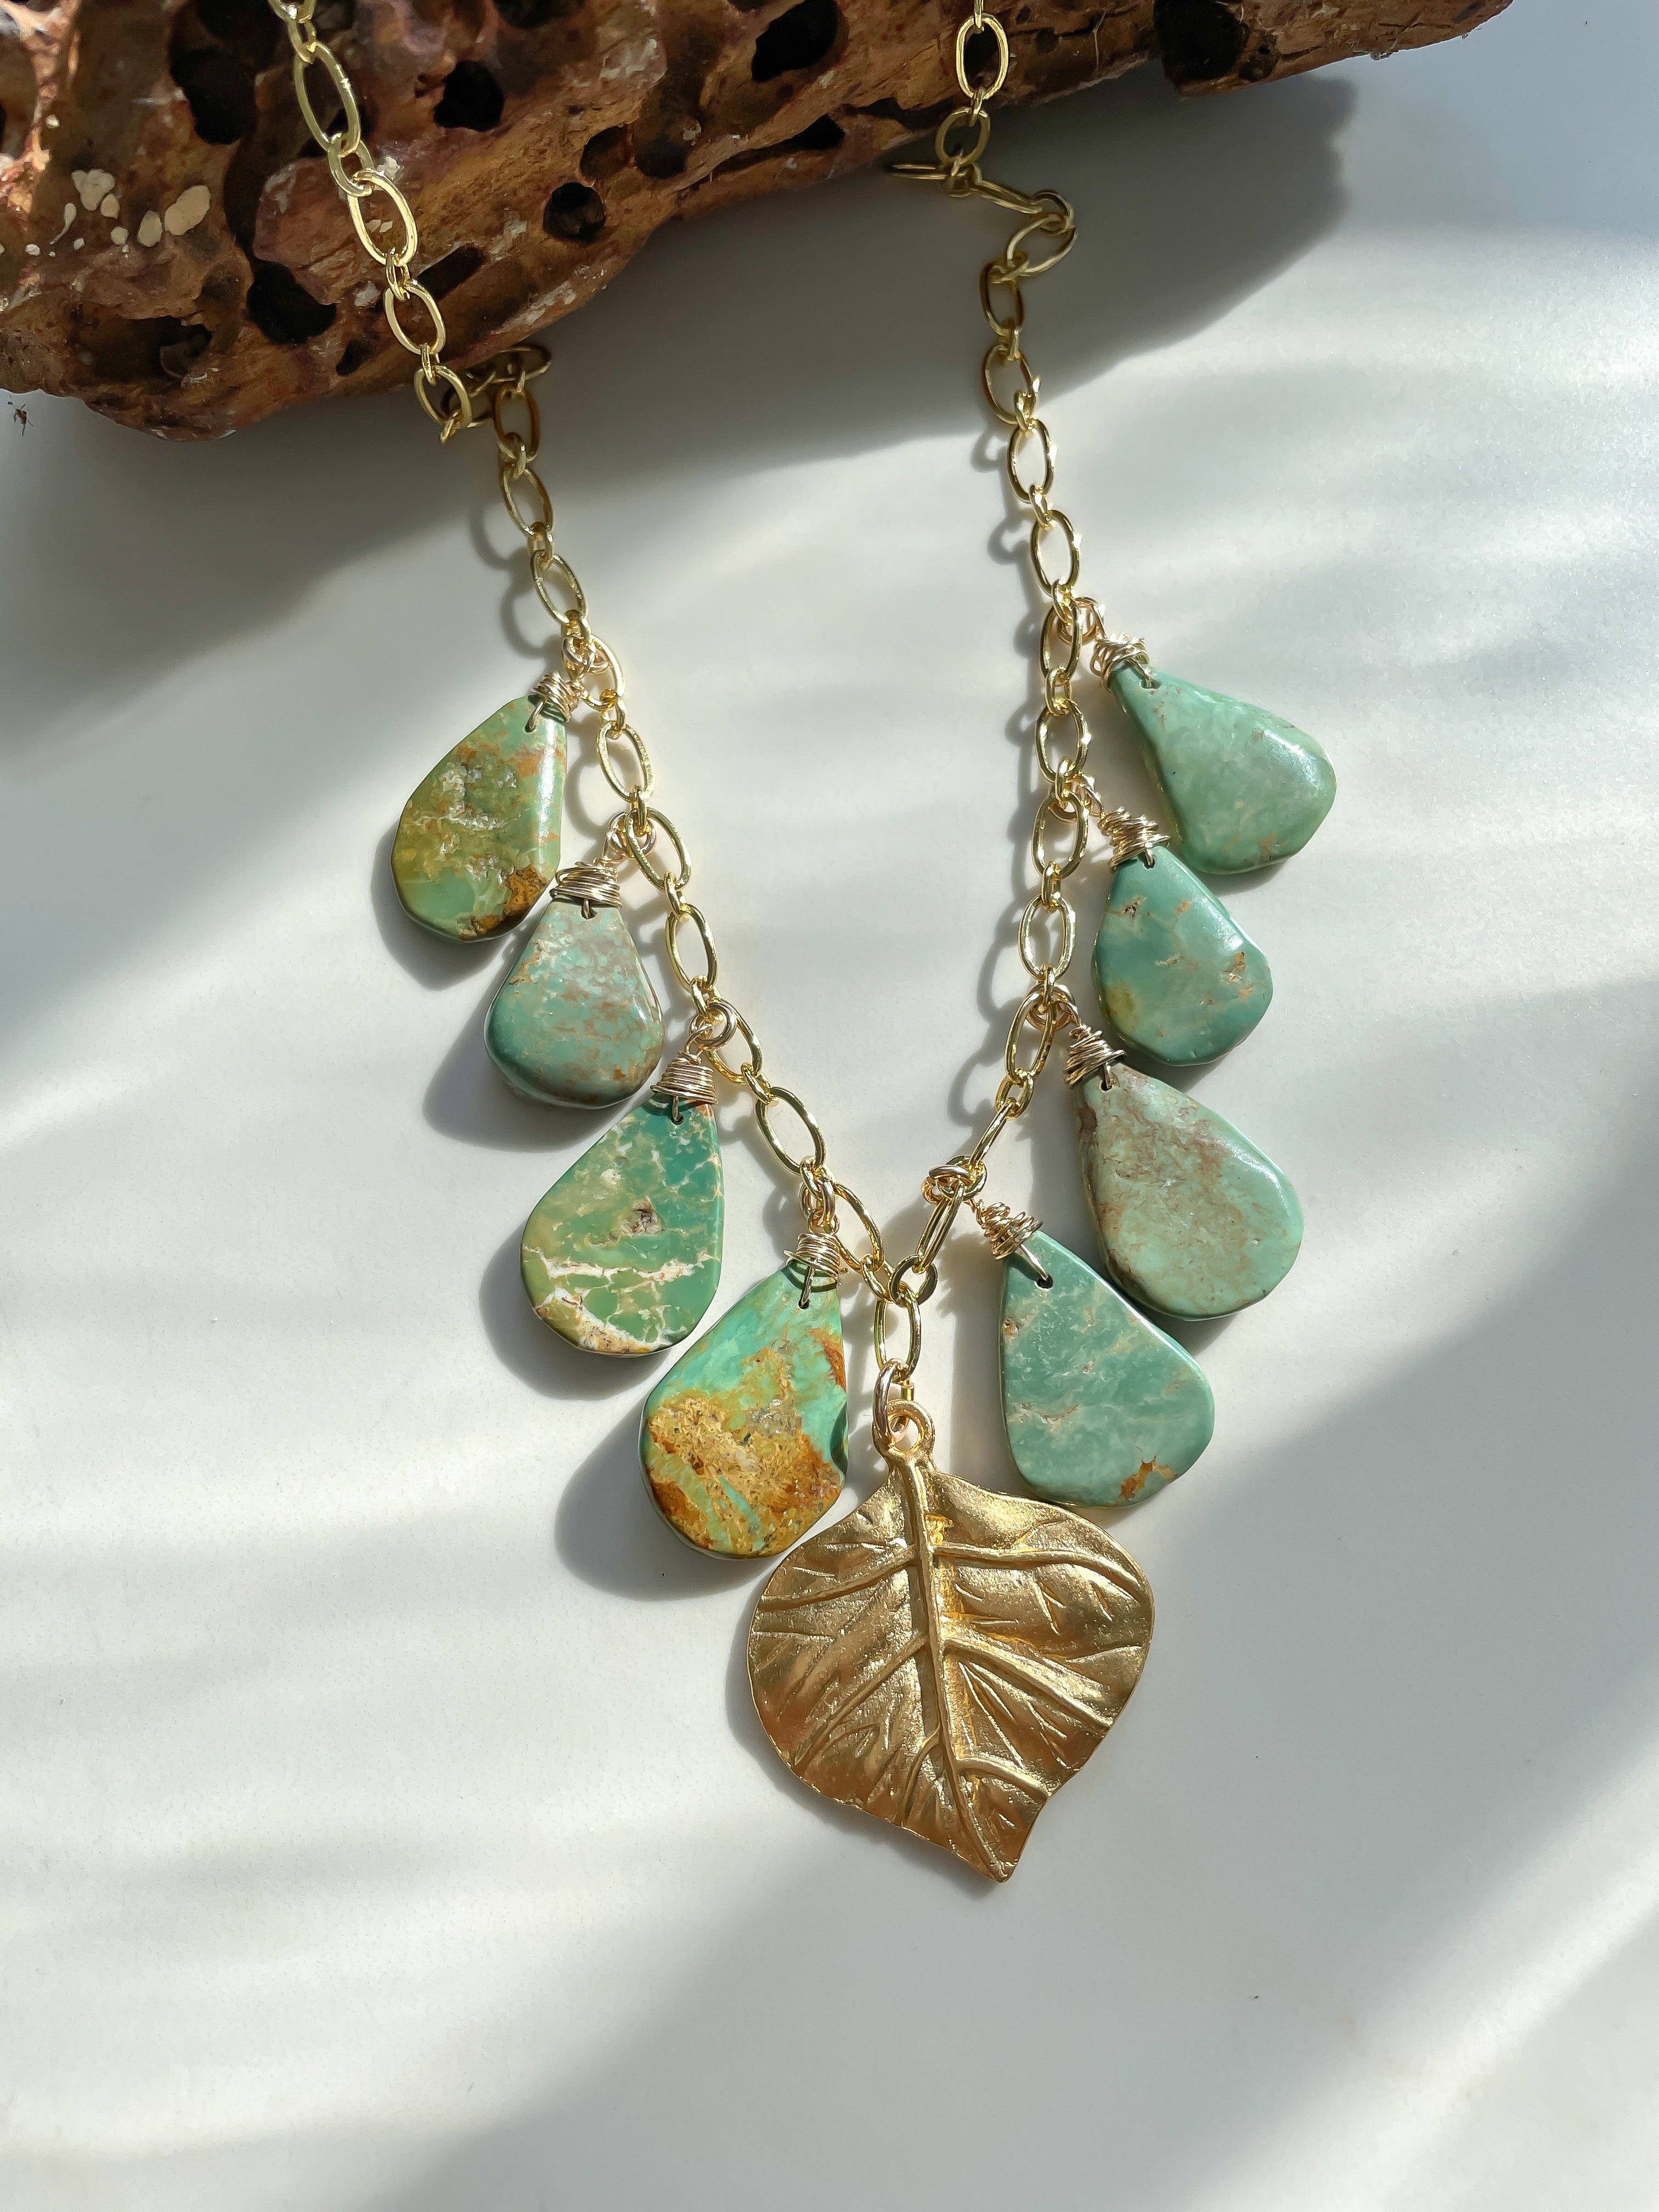 Quaking Aspen Leaf Turquoise Necklace